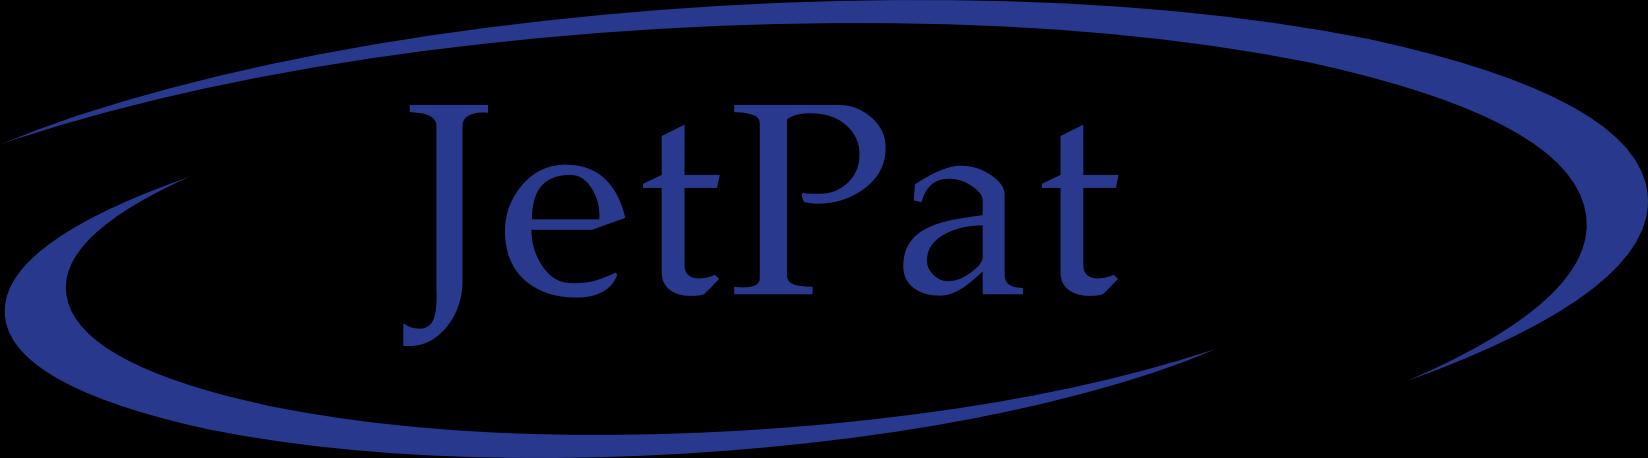 Jetpat_logo